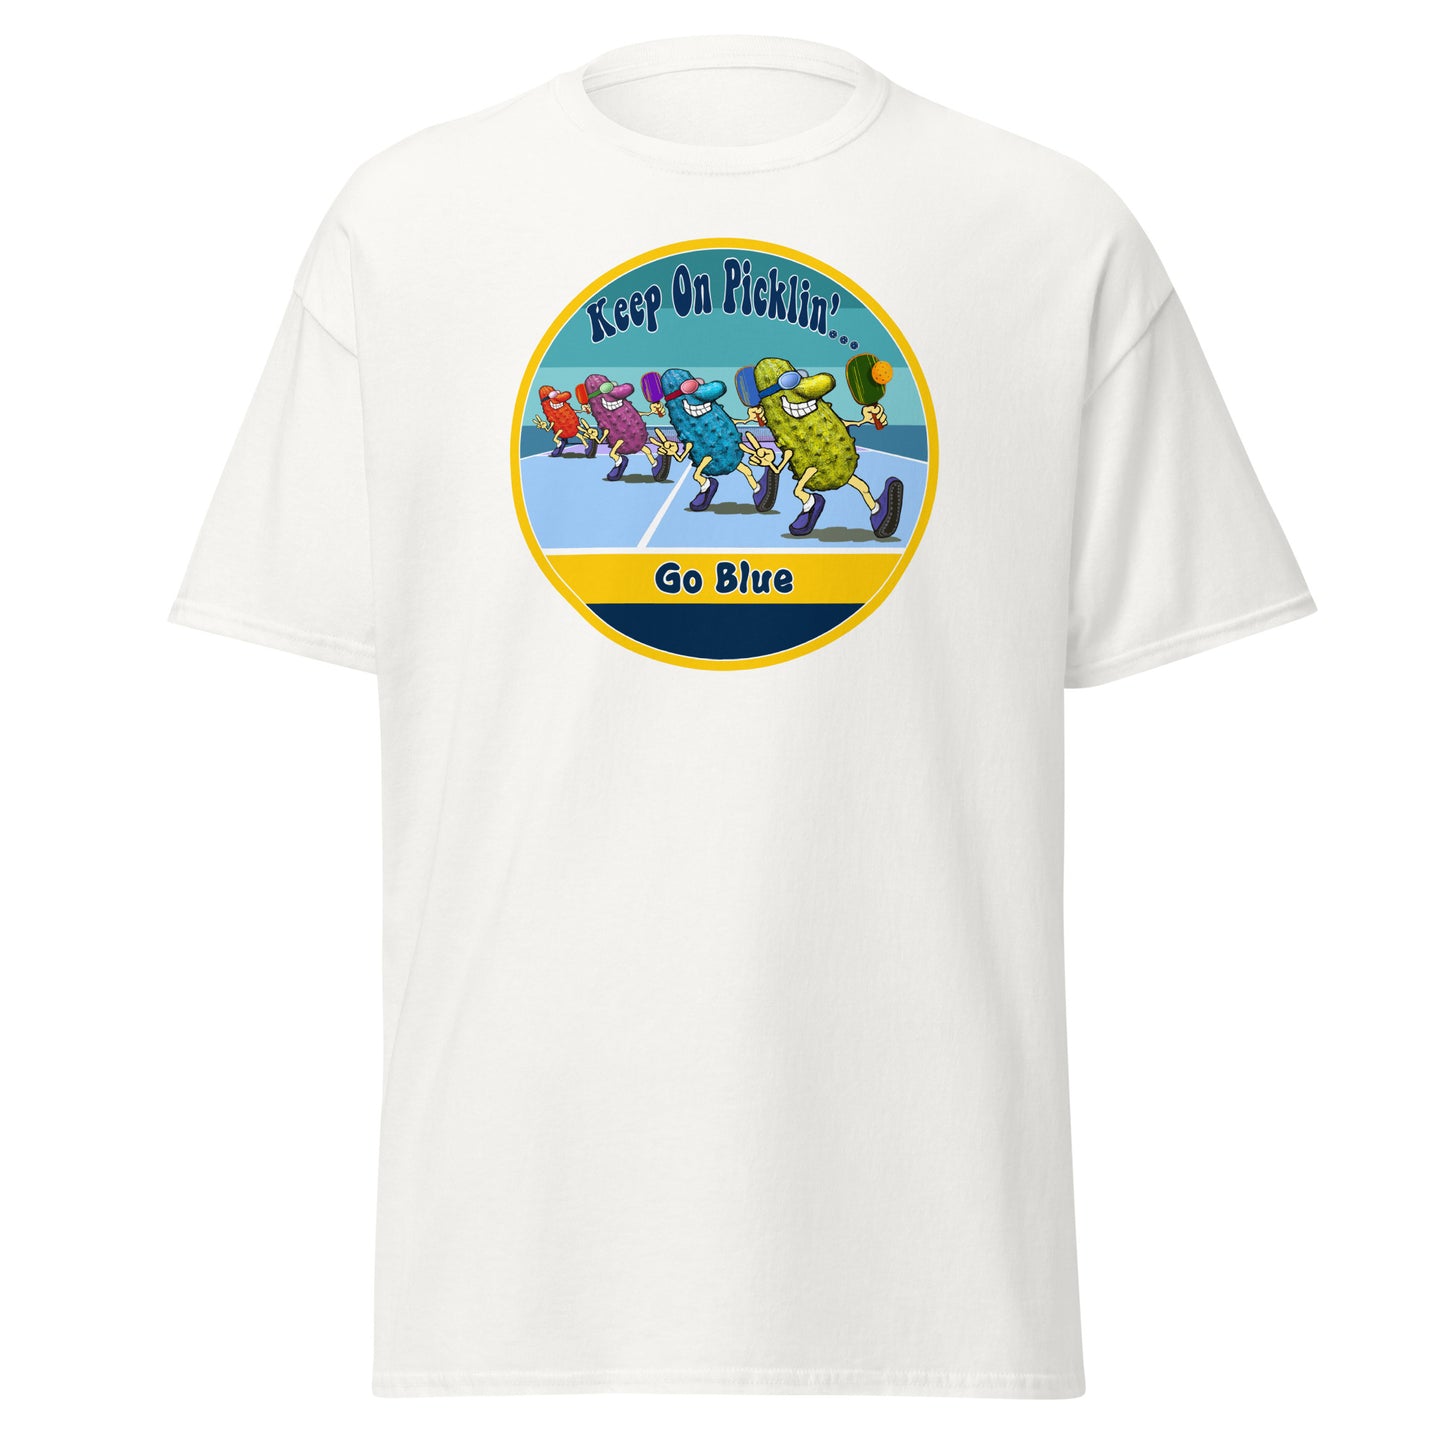 Michigan Wolverines Pickleball Shirt, Short-sleeve Tee, Retro Stripes Graphic